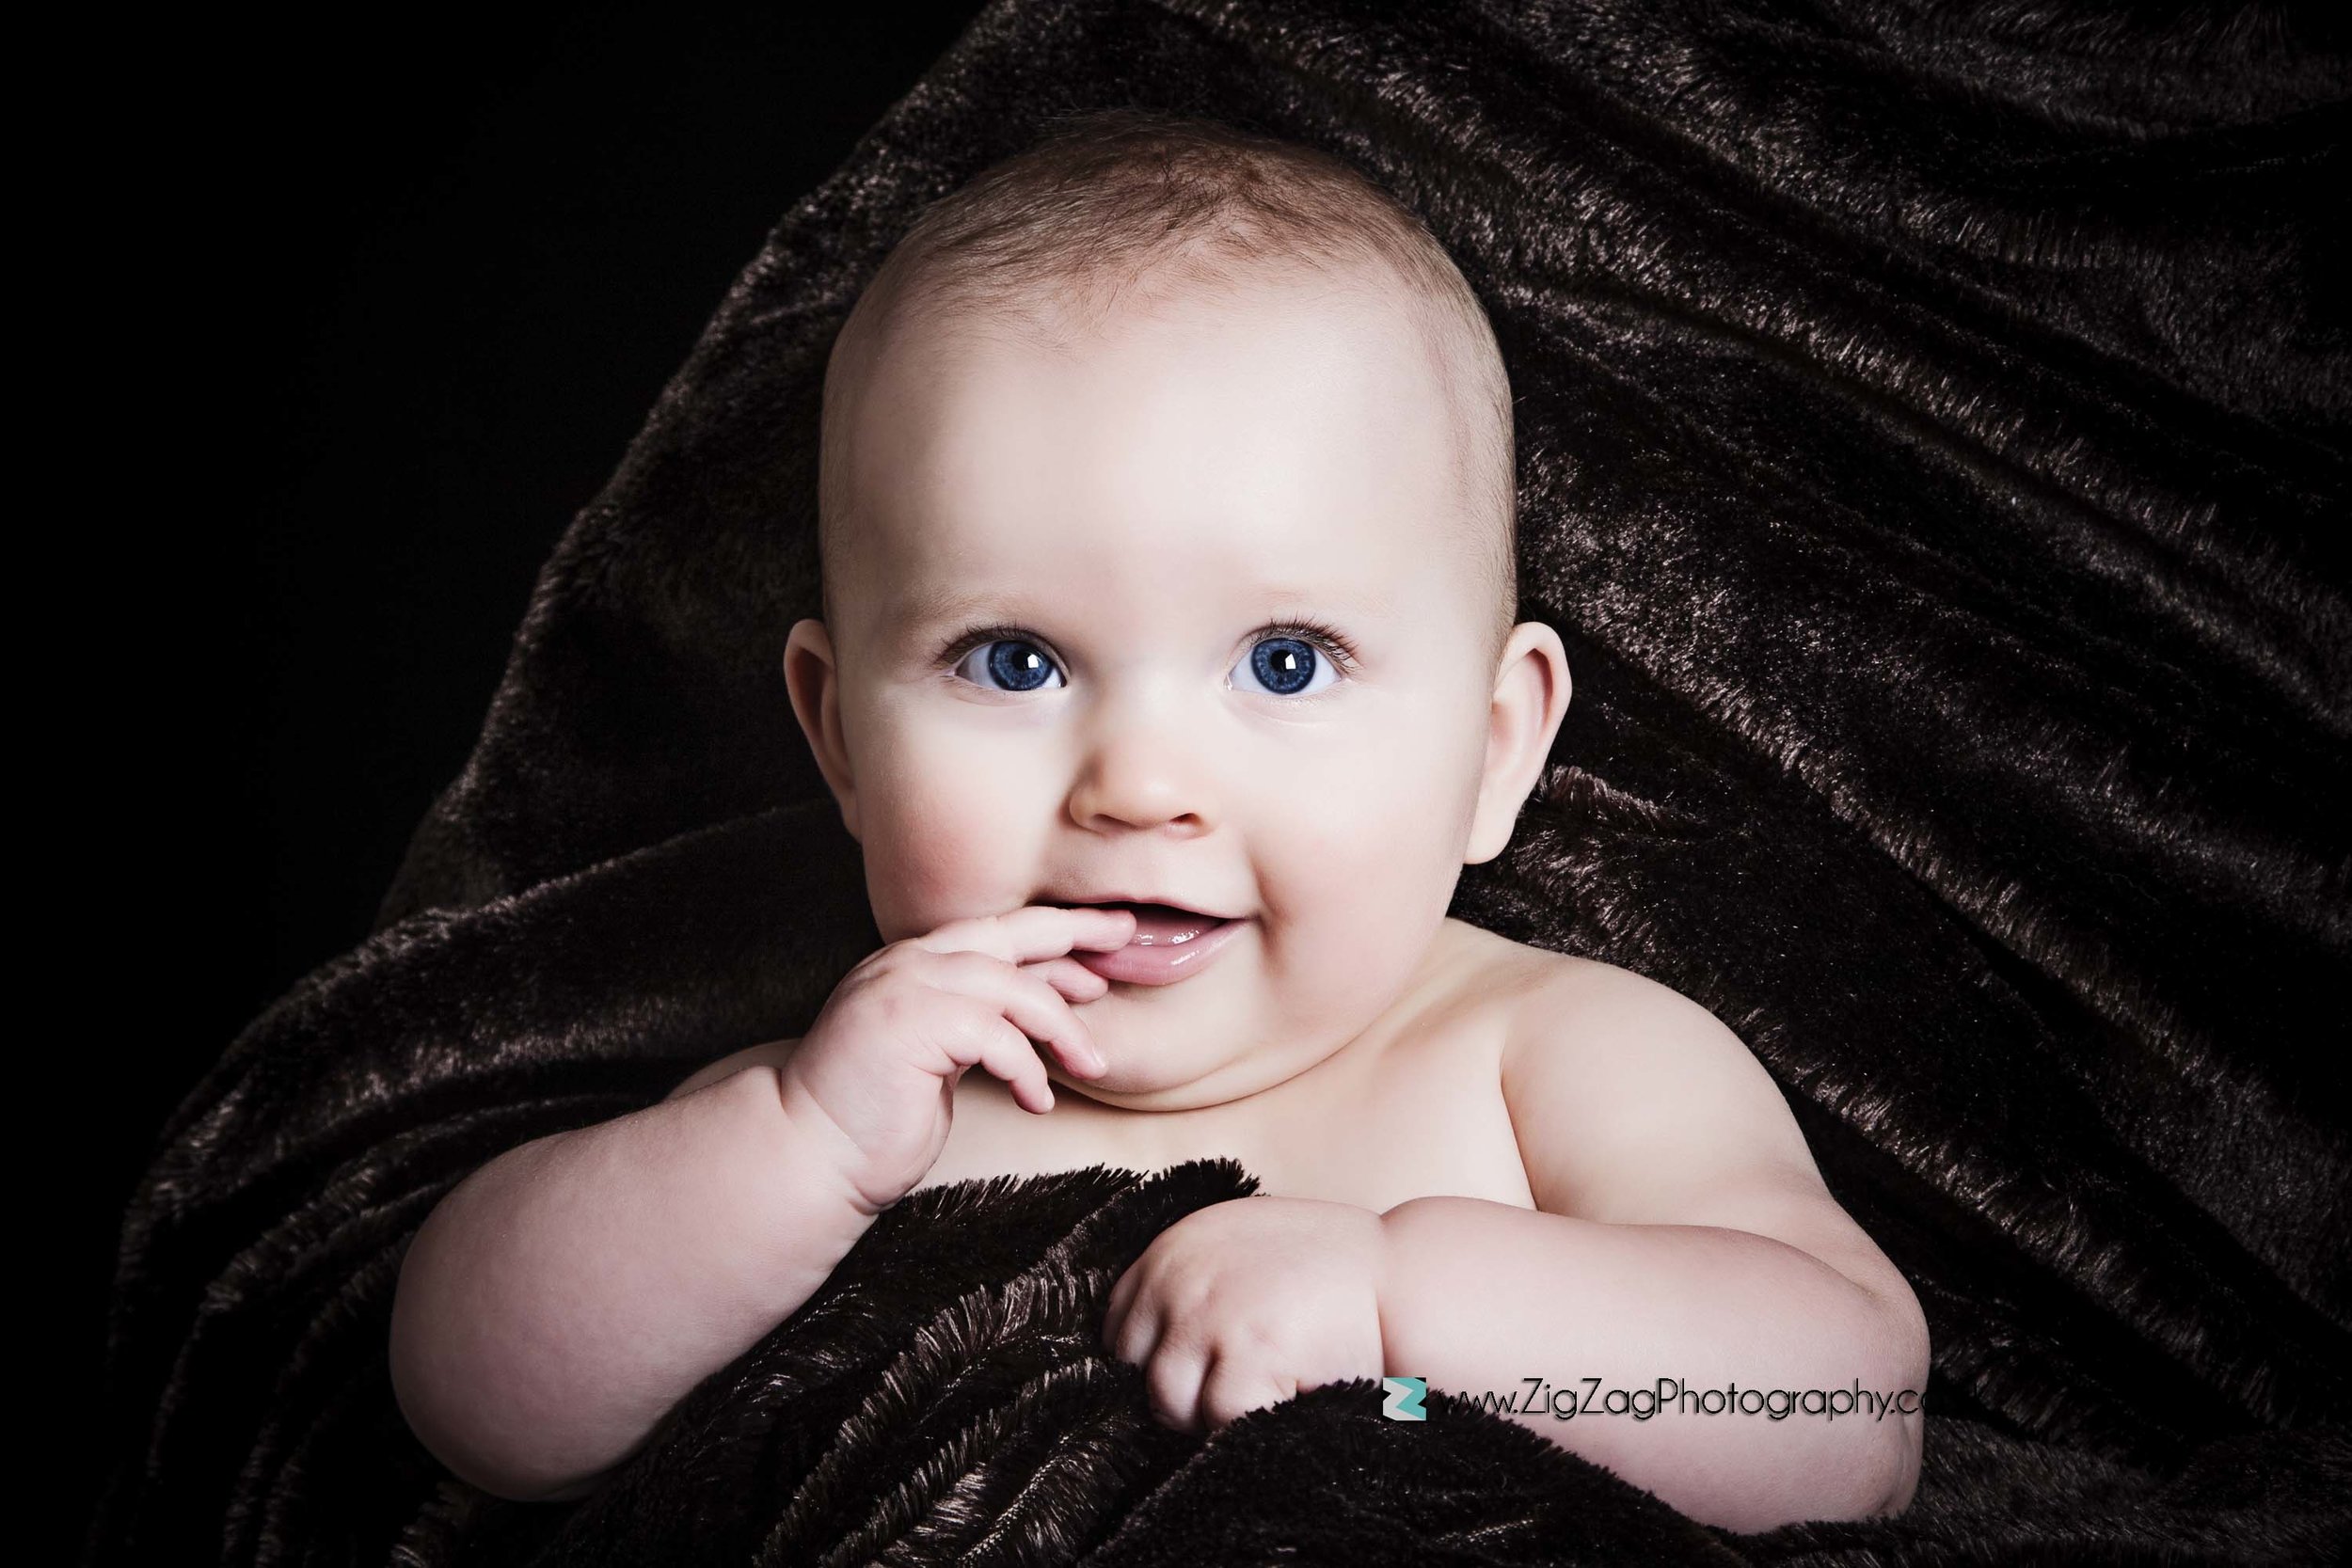 photography-photoshoot-baby-leicester-studio-newborn-blanket-prop-fur-blue-eyes.jpg